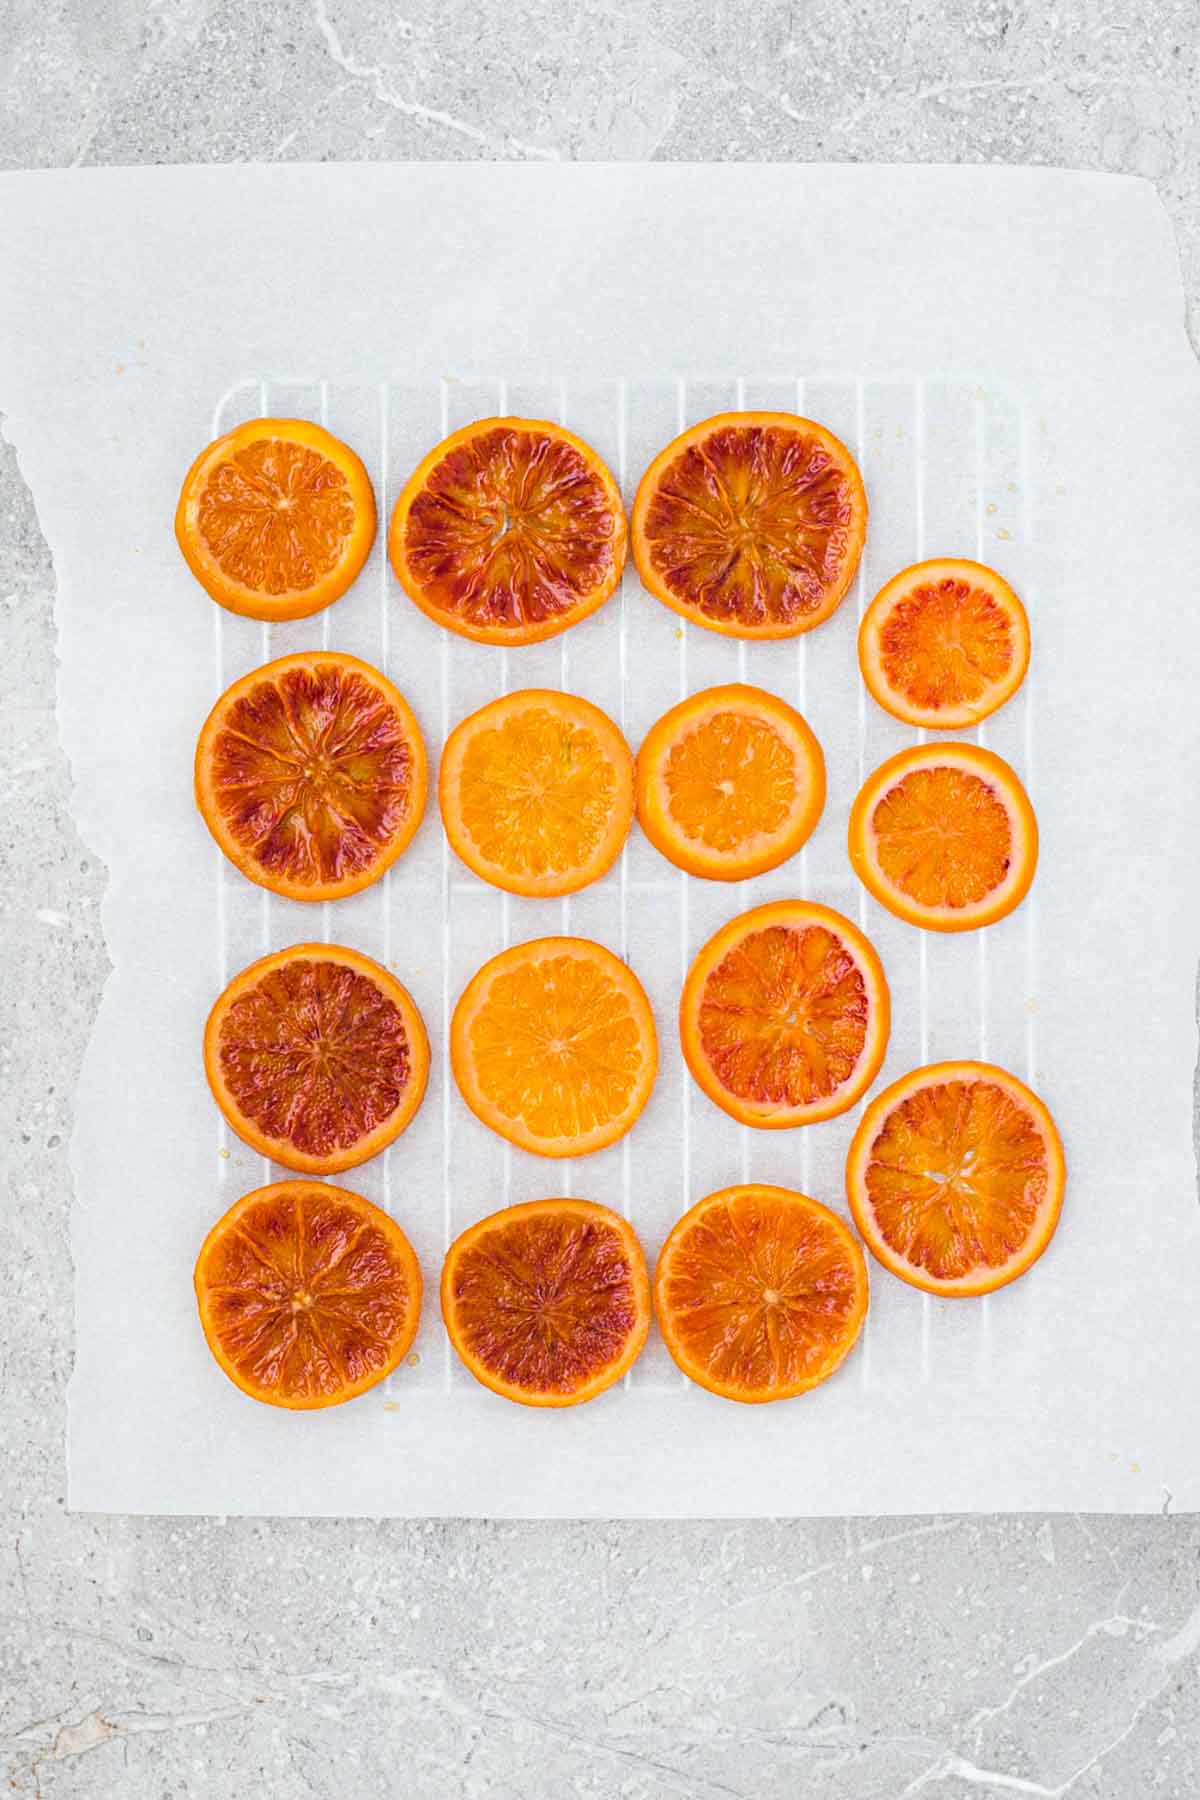 Candied blood orange slices recipe – a beautiful orange garnish